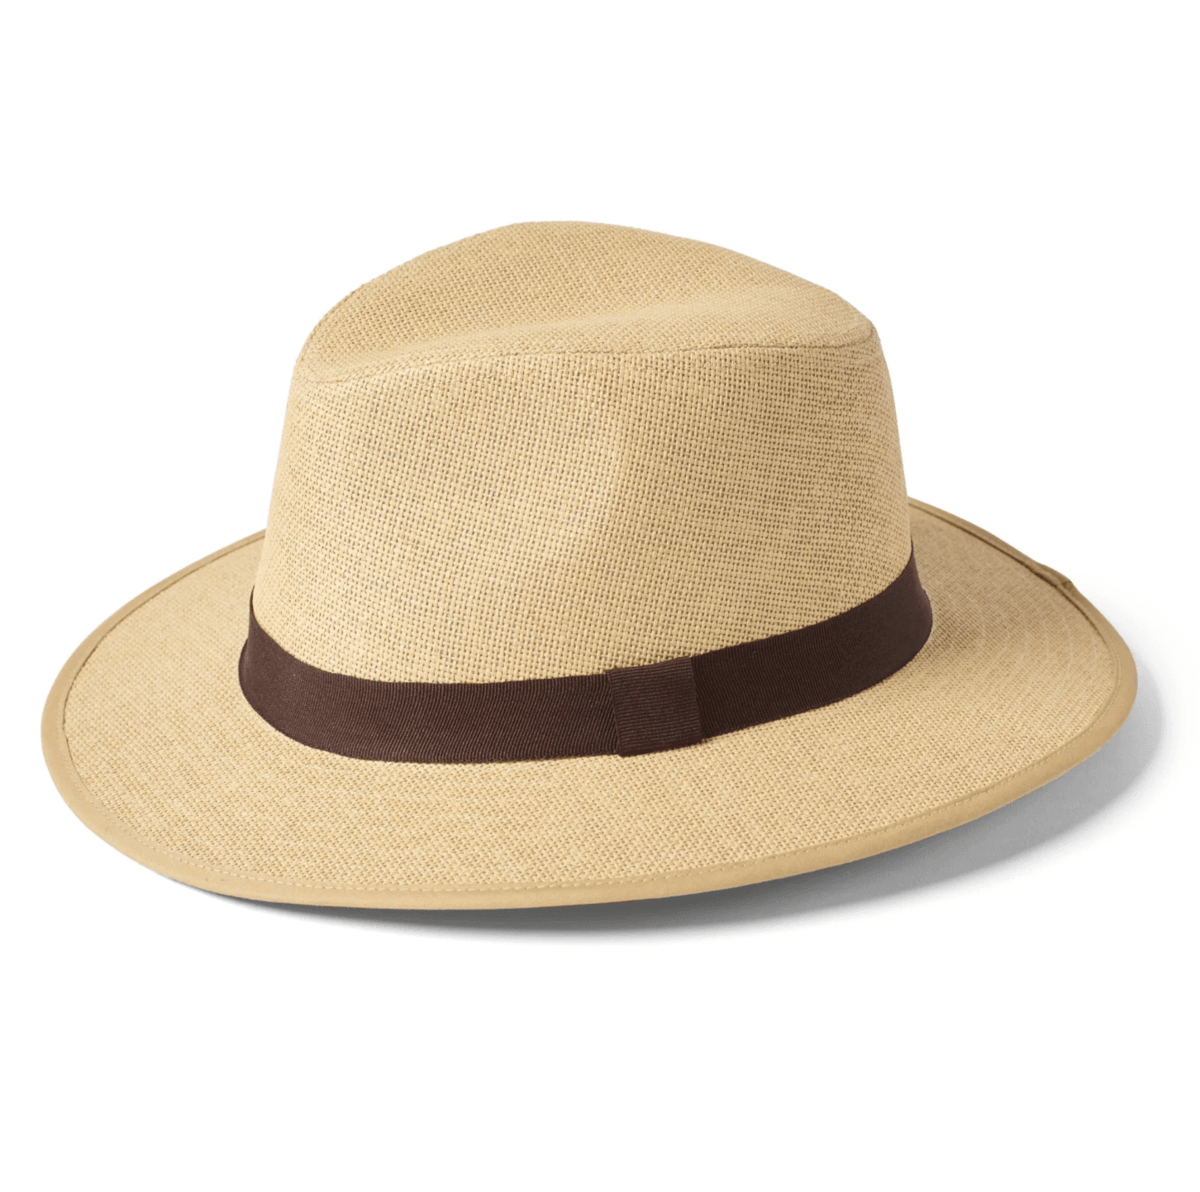 Failsworth Paper Straw Hat - Failsworth Hats - Hats, Headbands